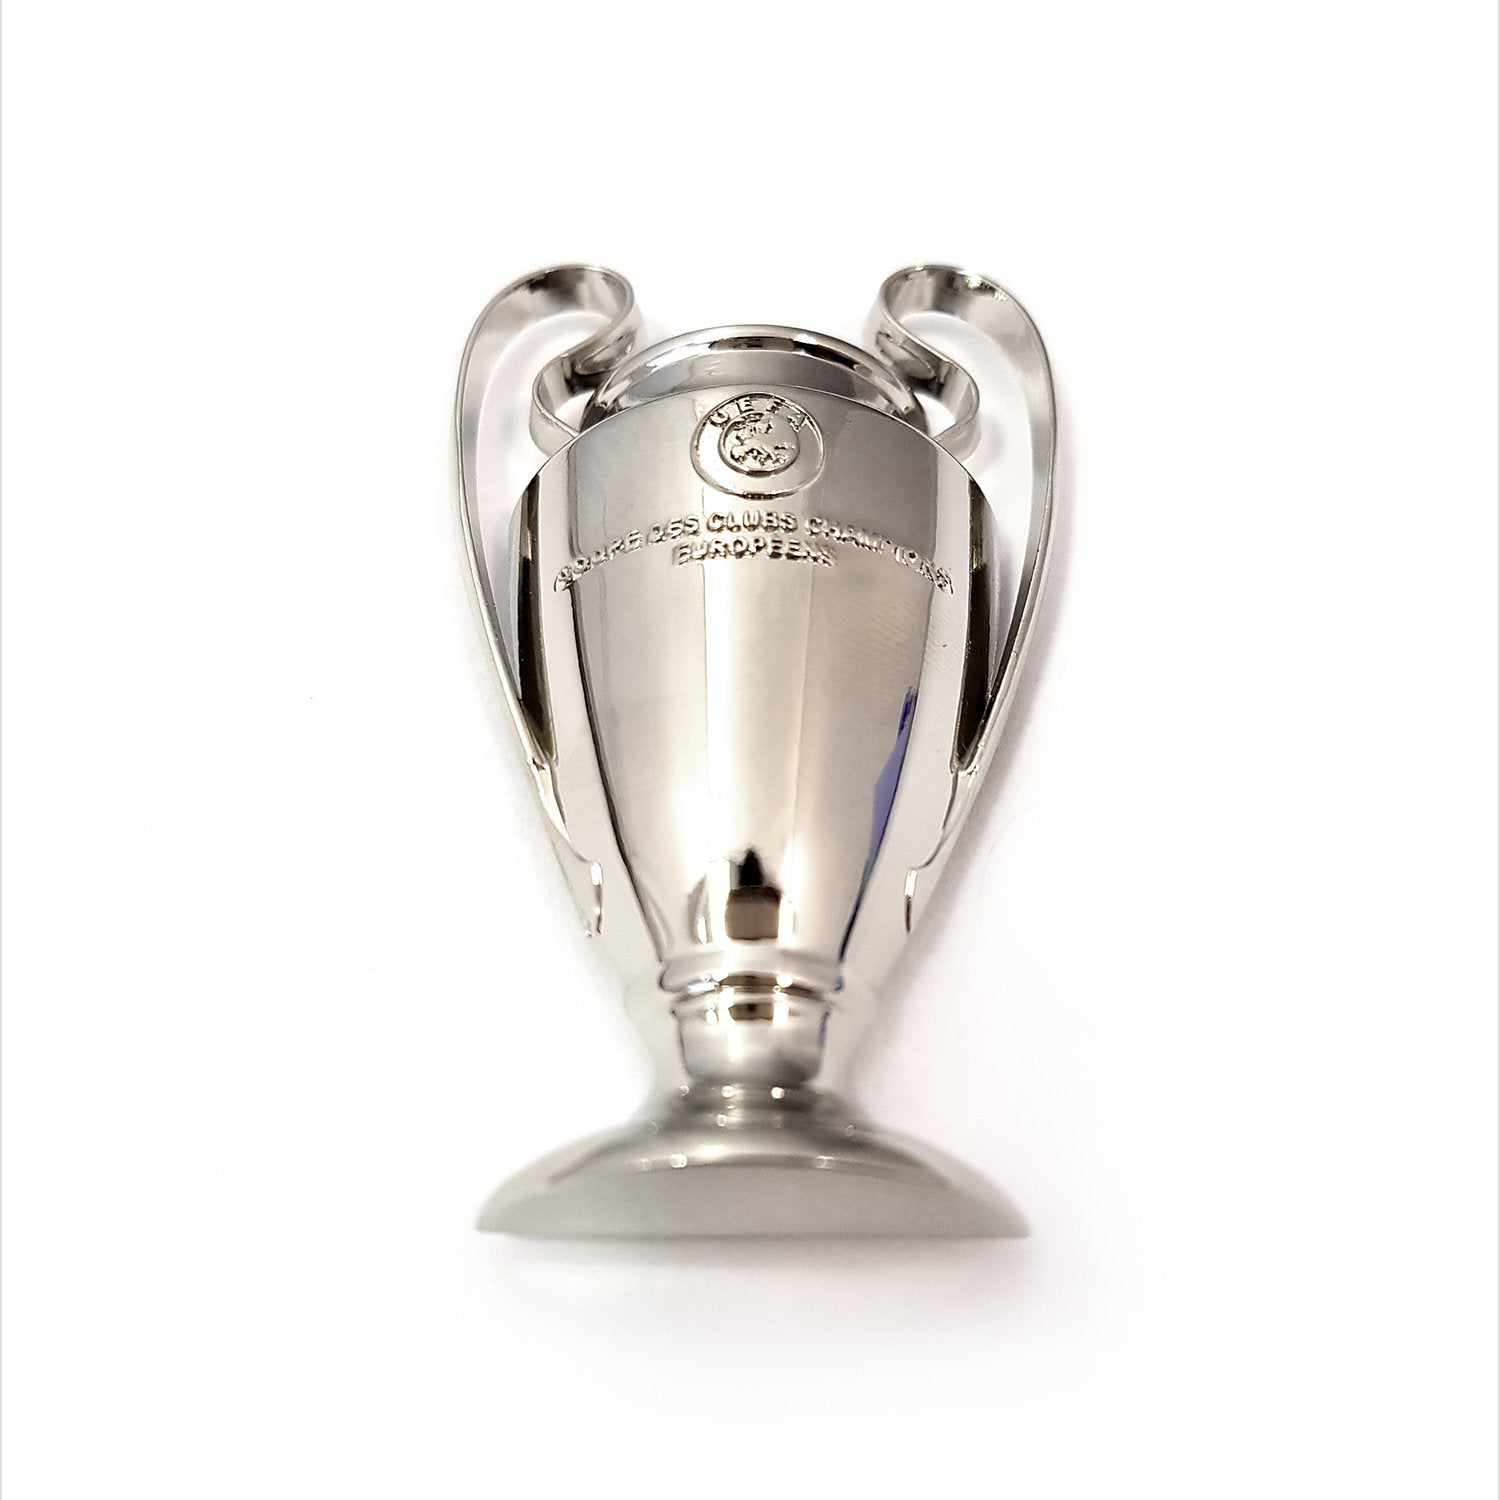 UEFA Champions League - Cartel icónico de trofeos UEFA Club Competitions  Online Store